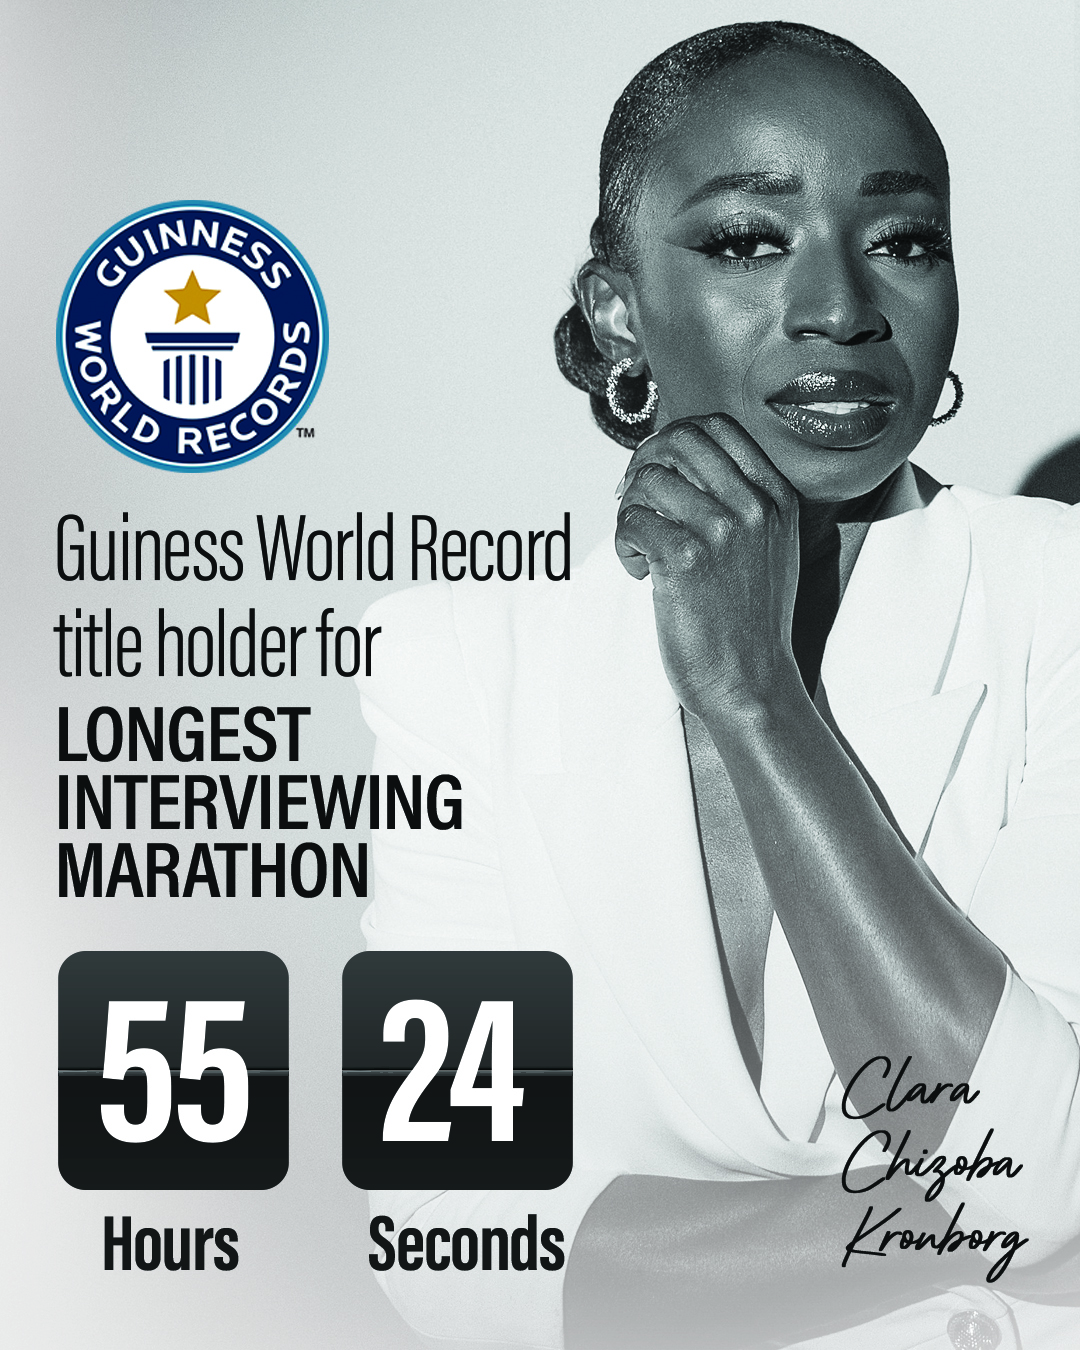 Clara Chizoba Kronborg Sets New Guinness World Record for Longest Interviewing Marathon 